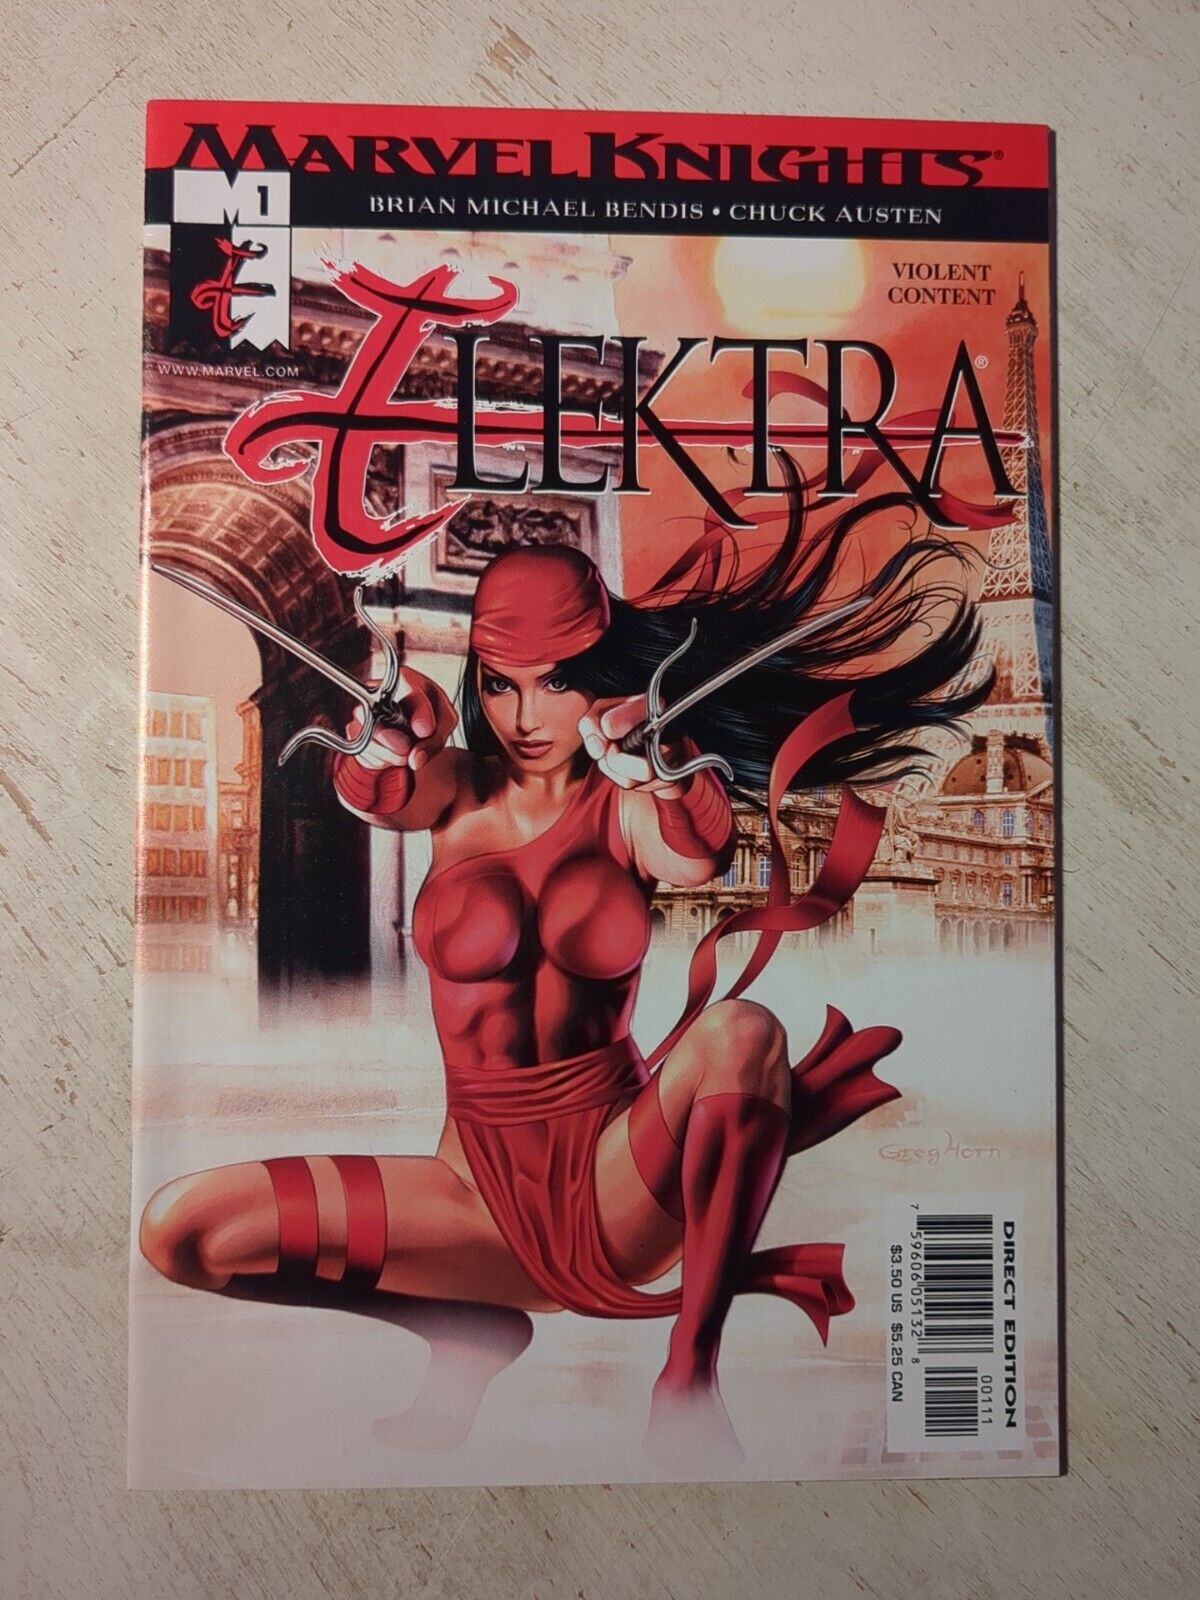 Elektra Vol. 2 #1 MCU SHIPS FREE 2001 Marvel Knights Bendis Austen